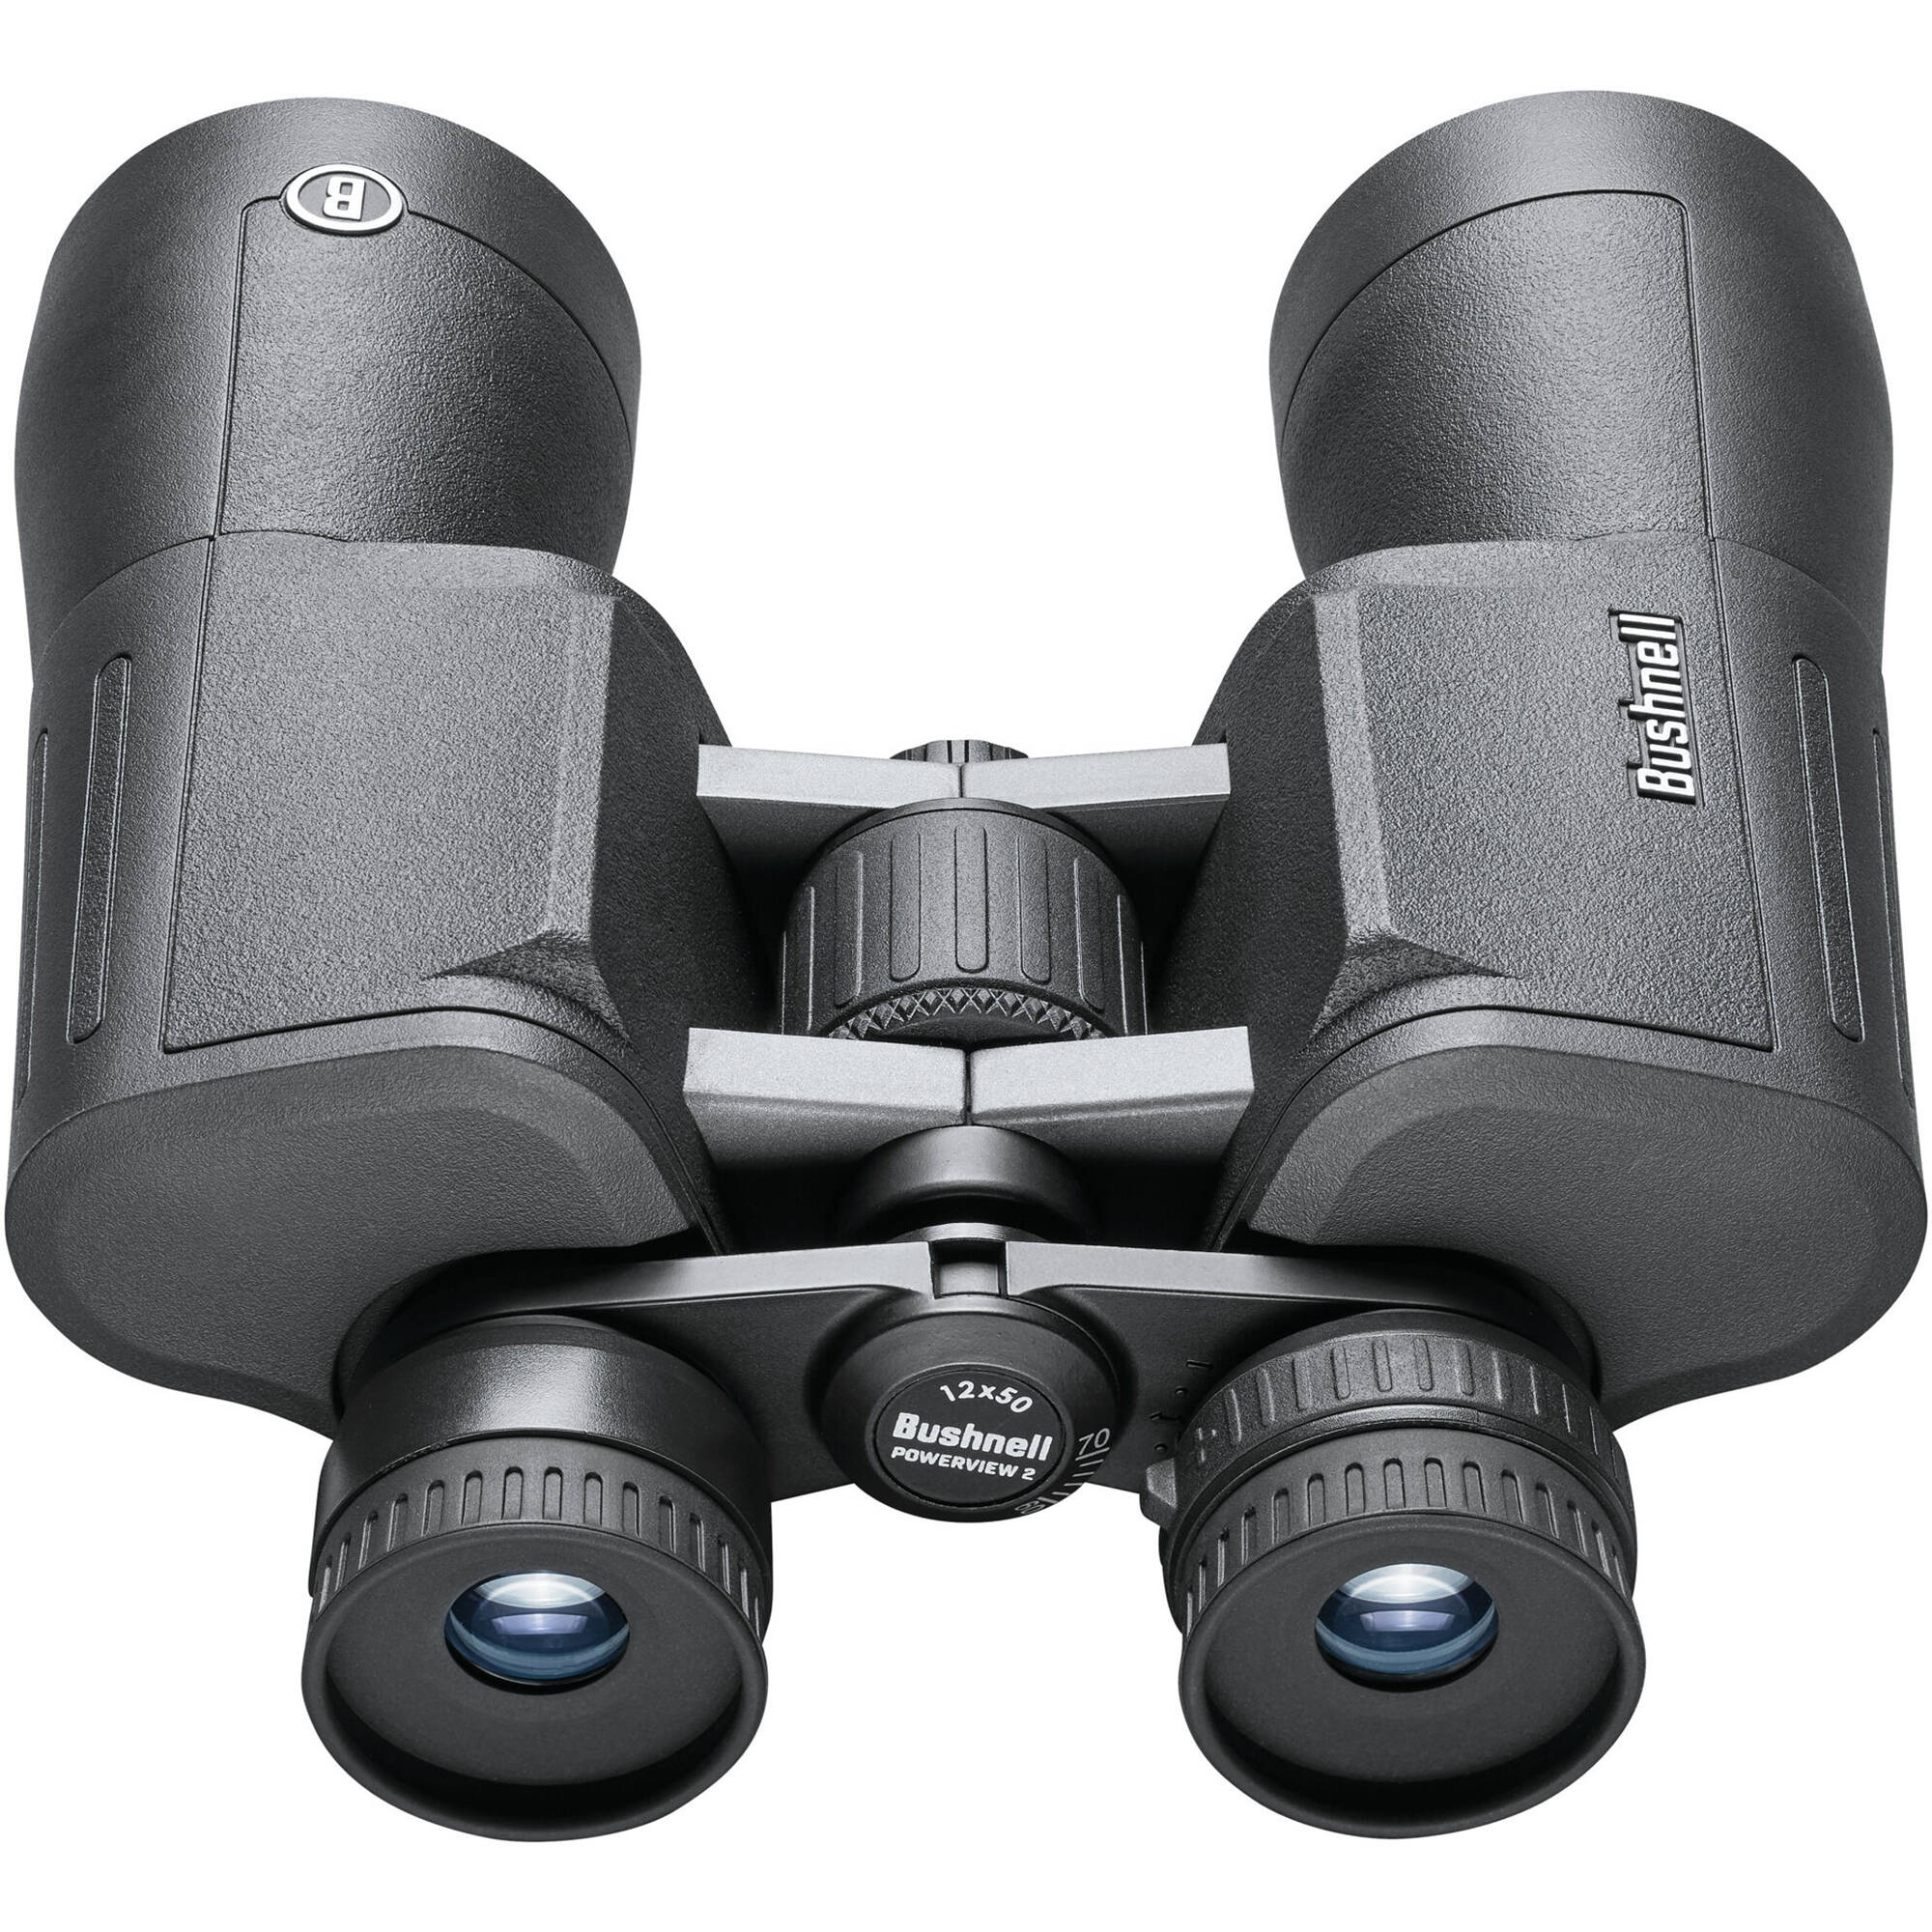 Bushnell 12x50 Powerview 2.0 Roof Prism Binoculars